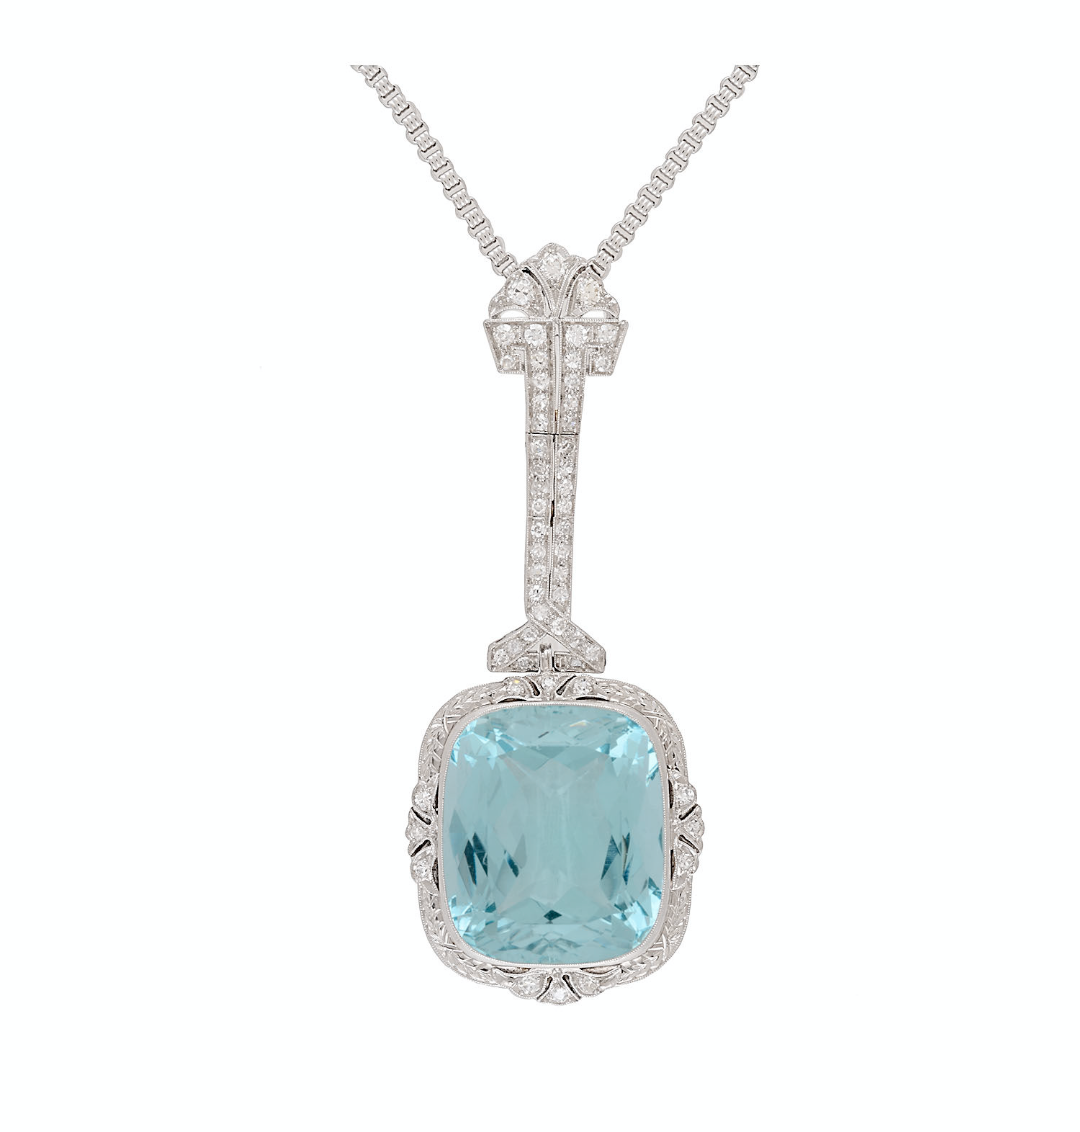 Vintage-Art-Deco-Era-GIA-Certified-Aquamarine-and-Old-Euro-Cut-Diamond-Necklace-Semi-Precious-Jewelry.png